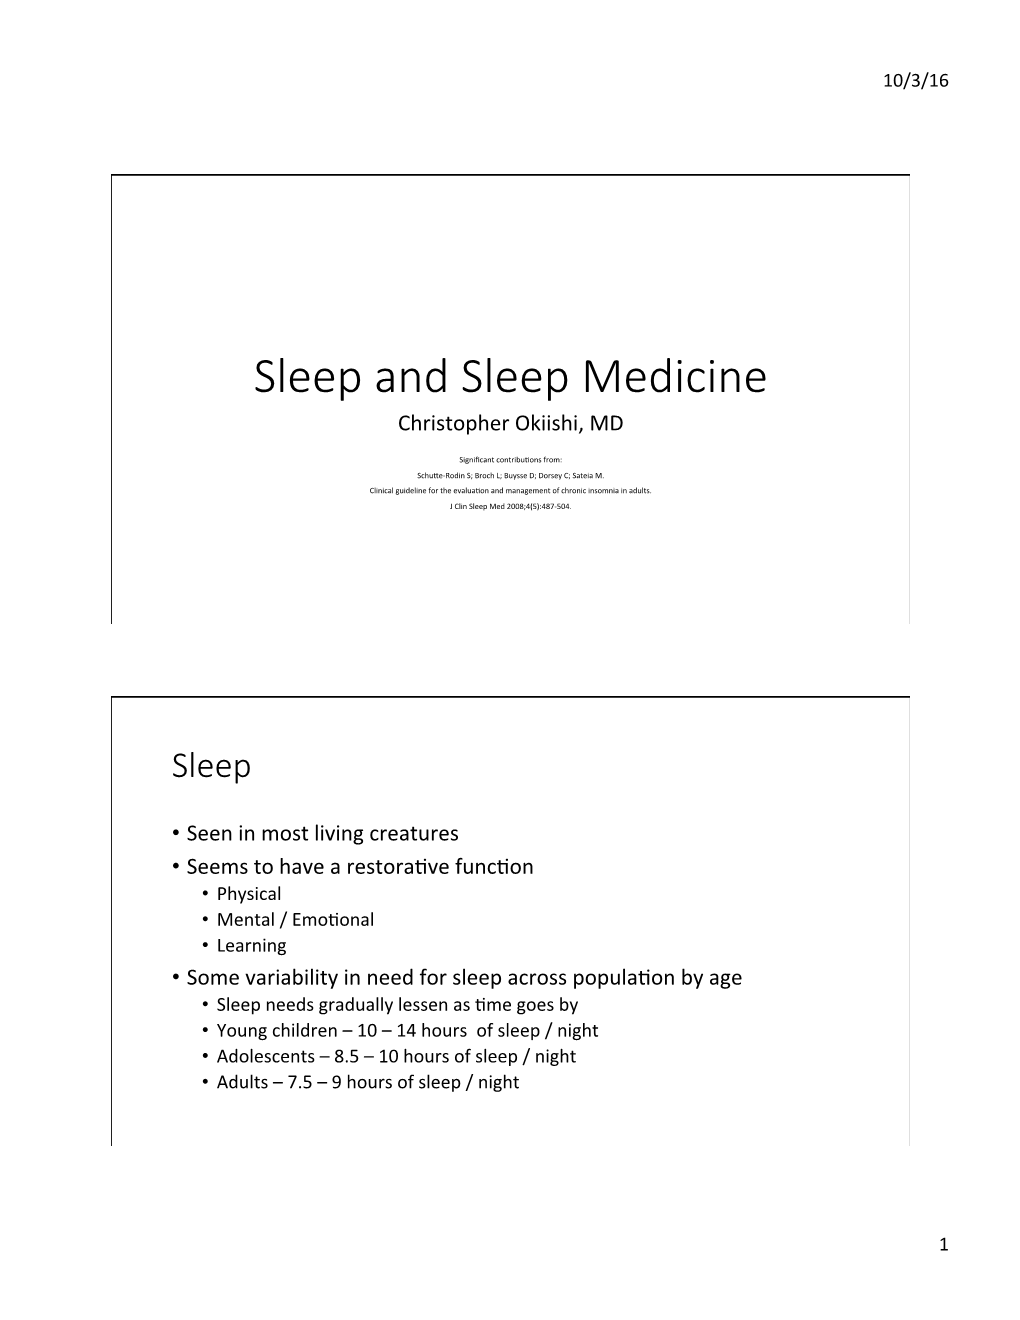 Sleep and Sleep Medicine.Pptx